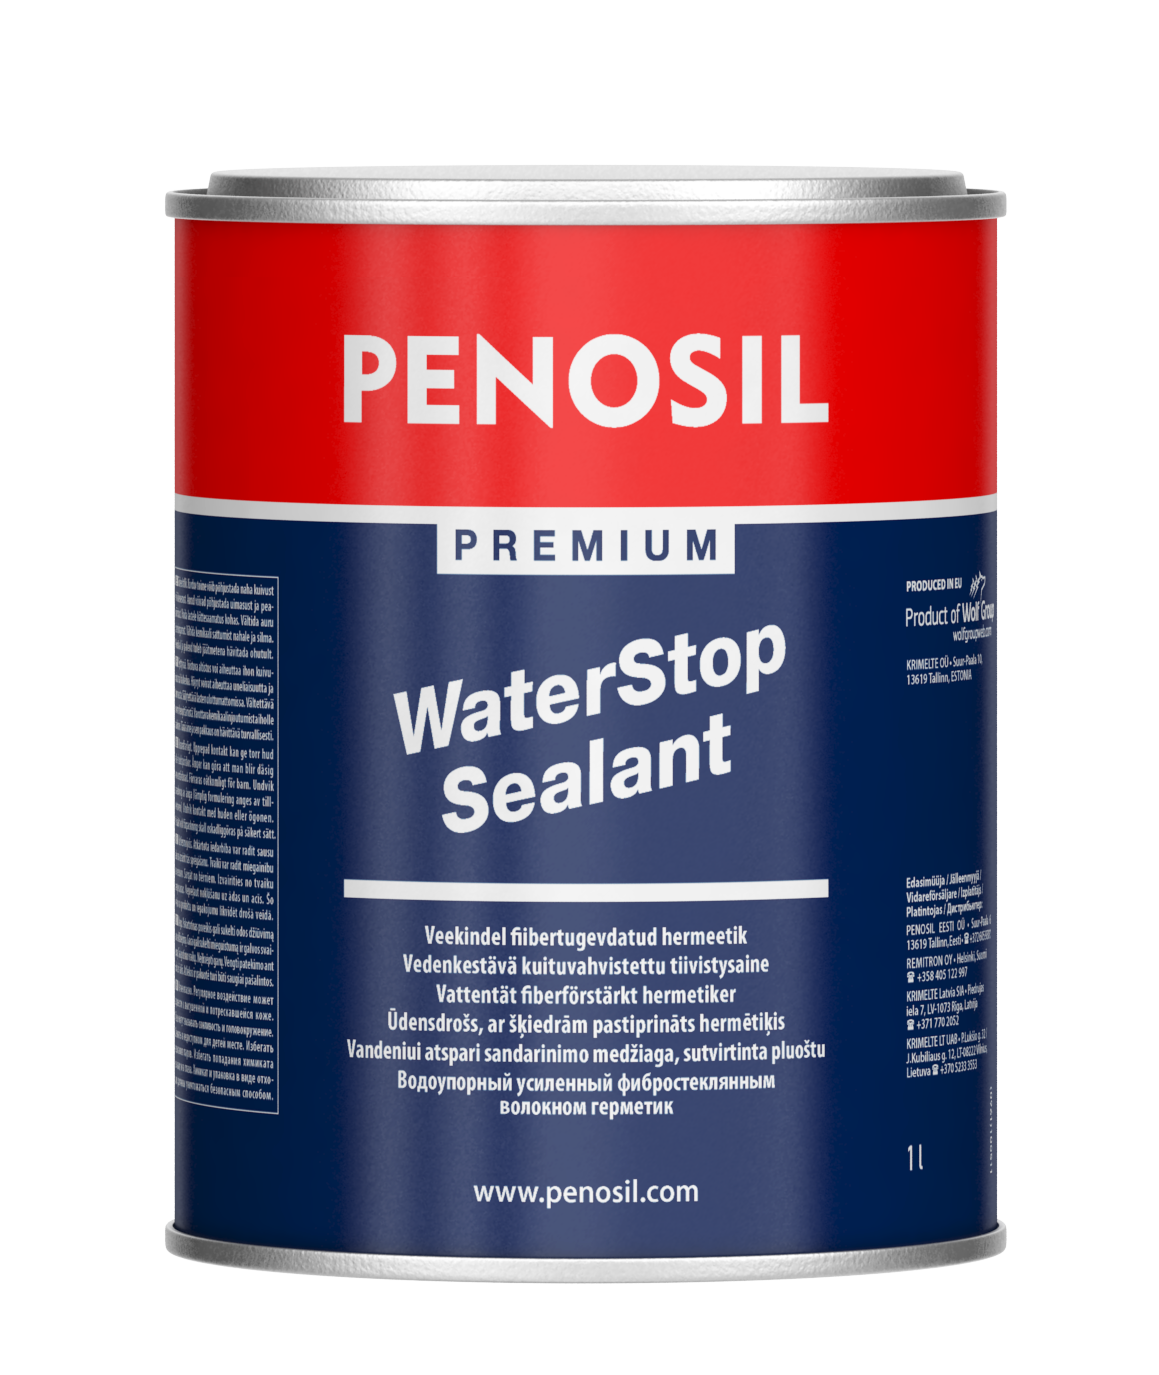 PENOSIL Premium WaterStop Sealant - a waterproof fibre reinforced sealant